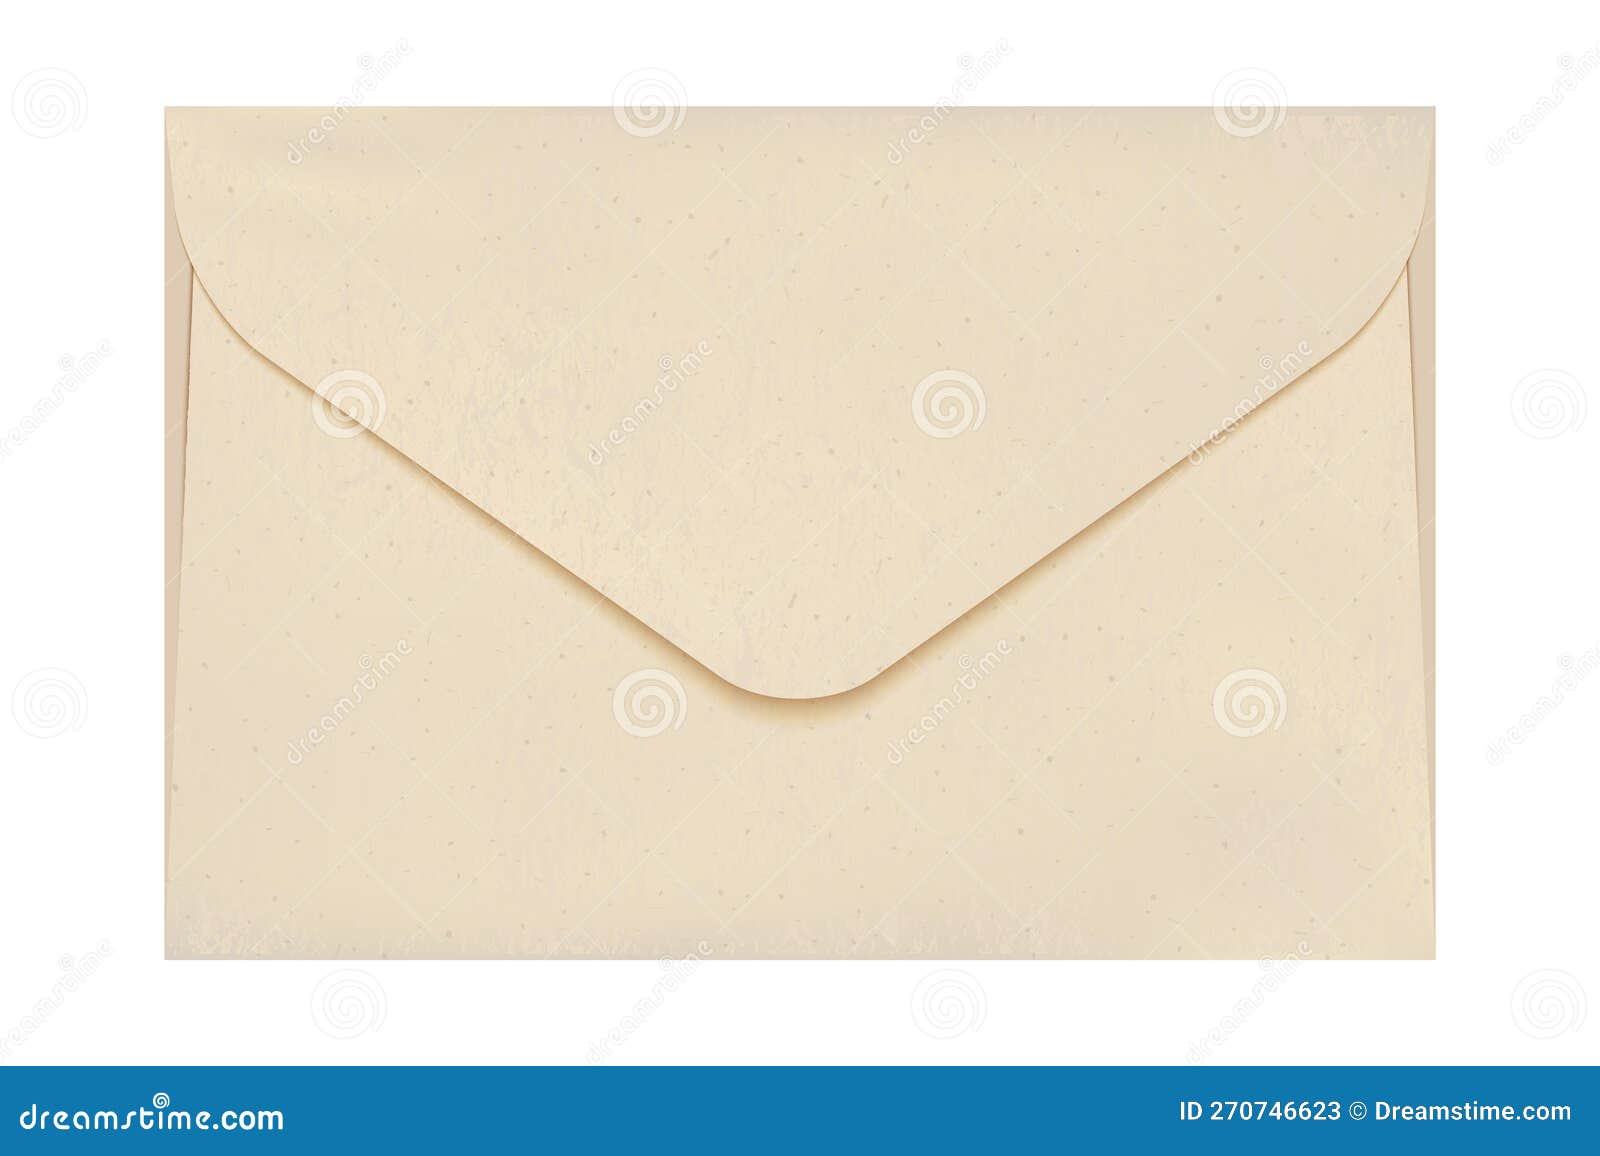 horizontal manilla envelope  on white background